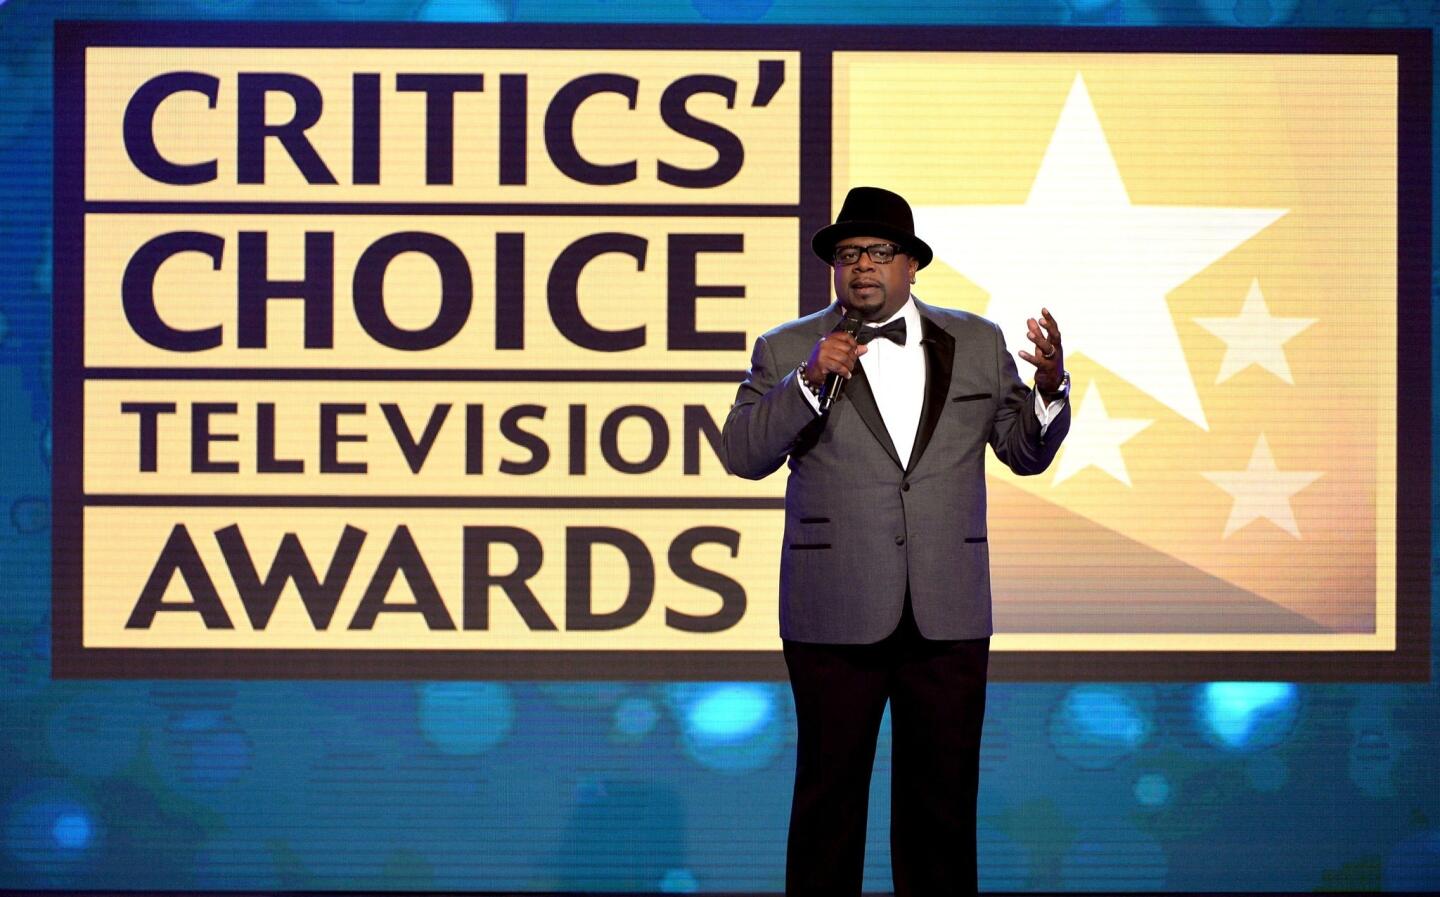 Critics' Choice Television Awards | Show highlights